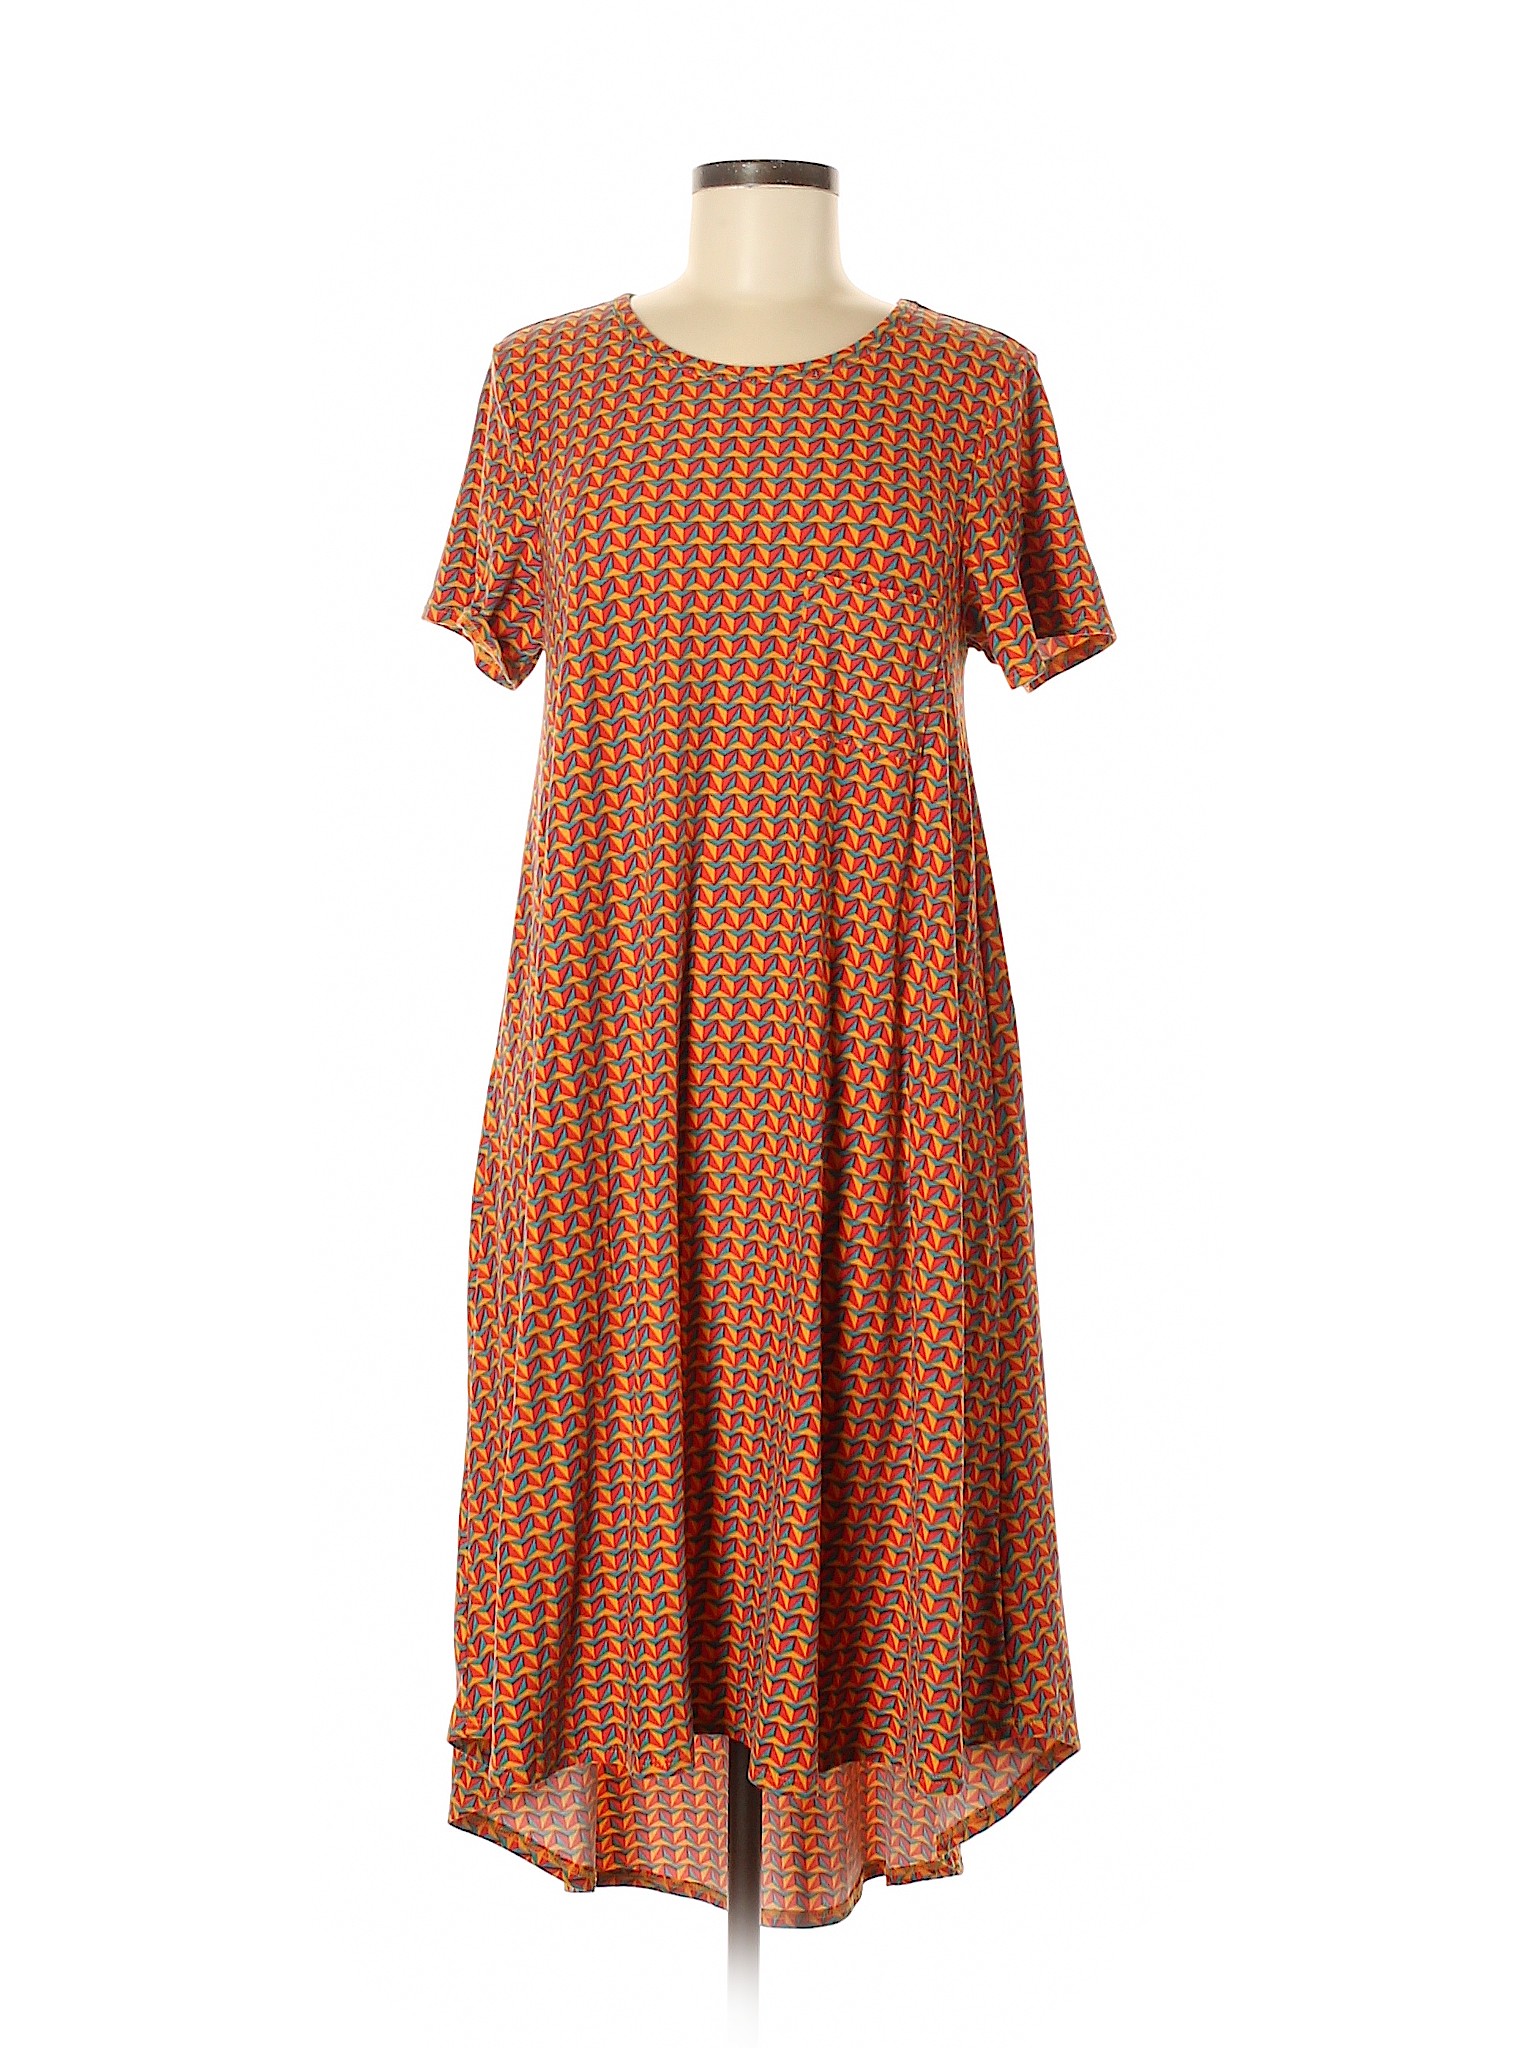 Lularoe Yellow Casual Dress Size S - 91% off | thredUP